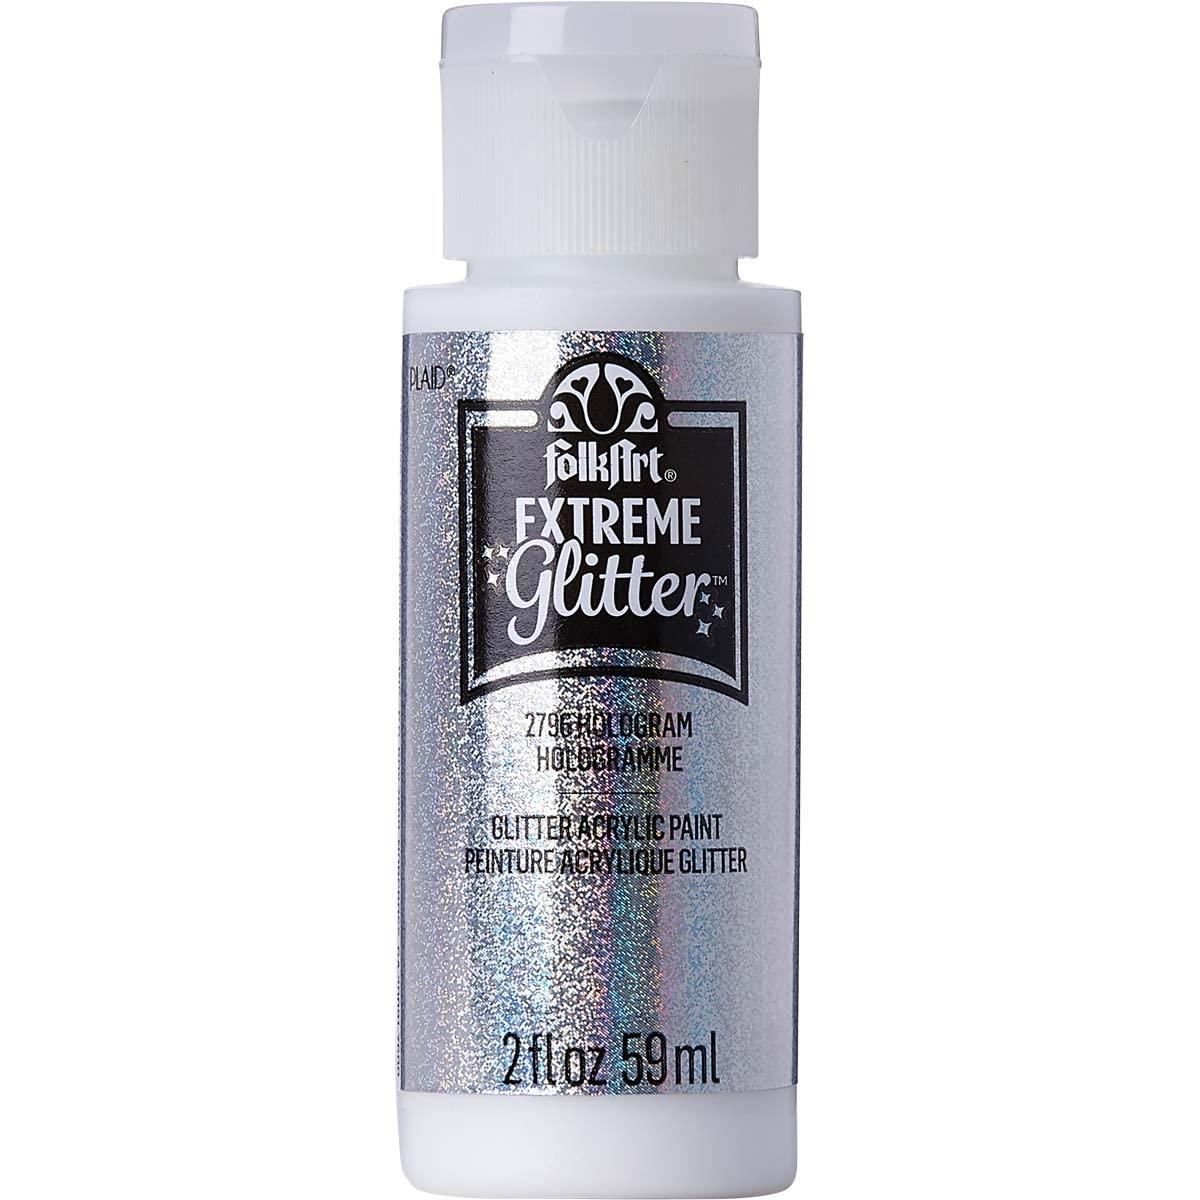 FolkArt Extreme Glitter Acrylic Paint in Assorted Colors (2 oz) 2796  Hologram (XGLT-2796)